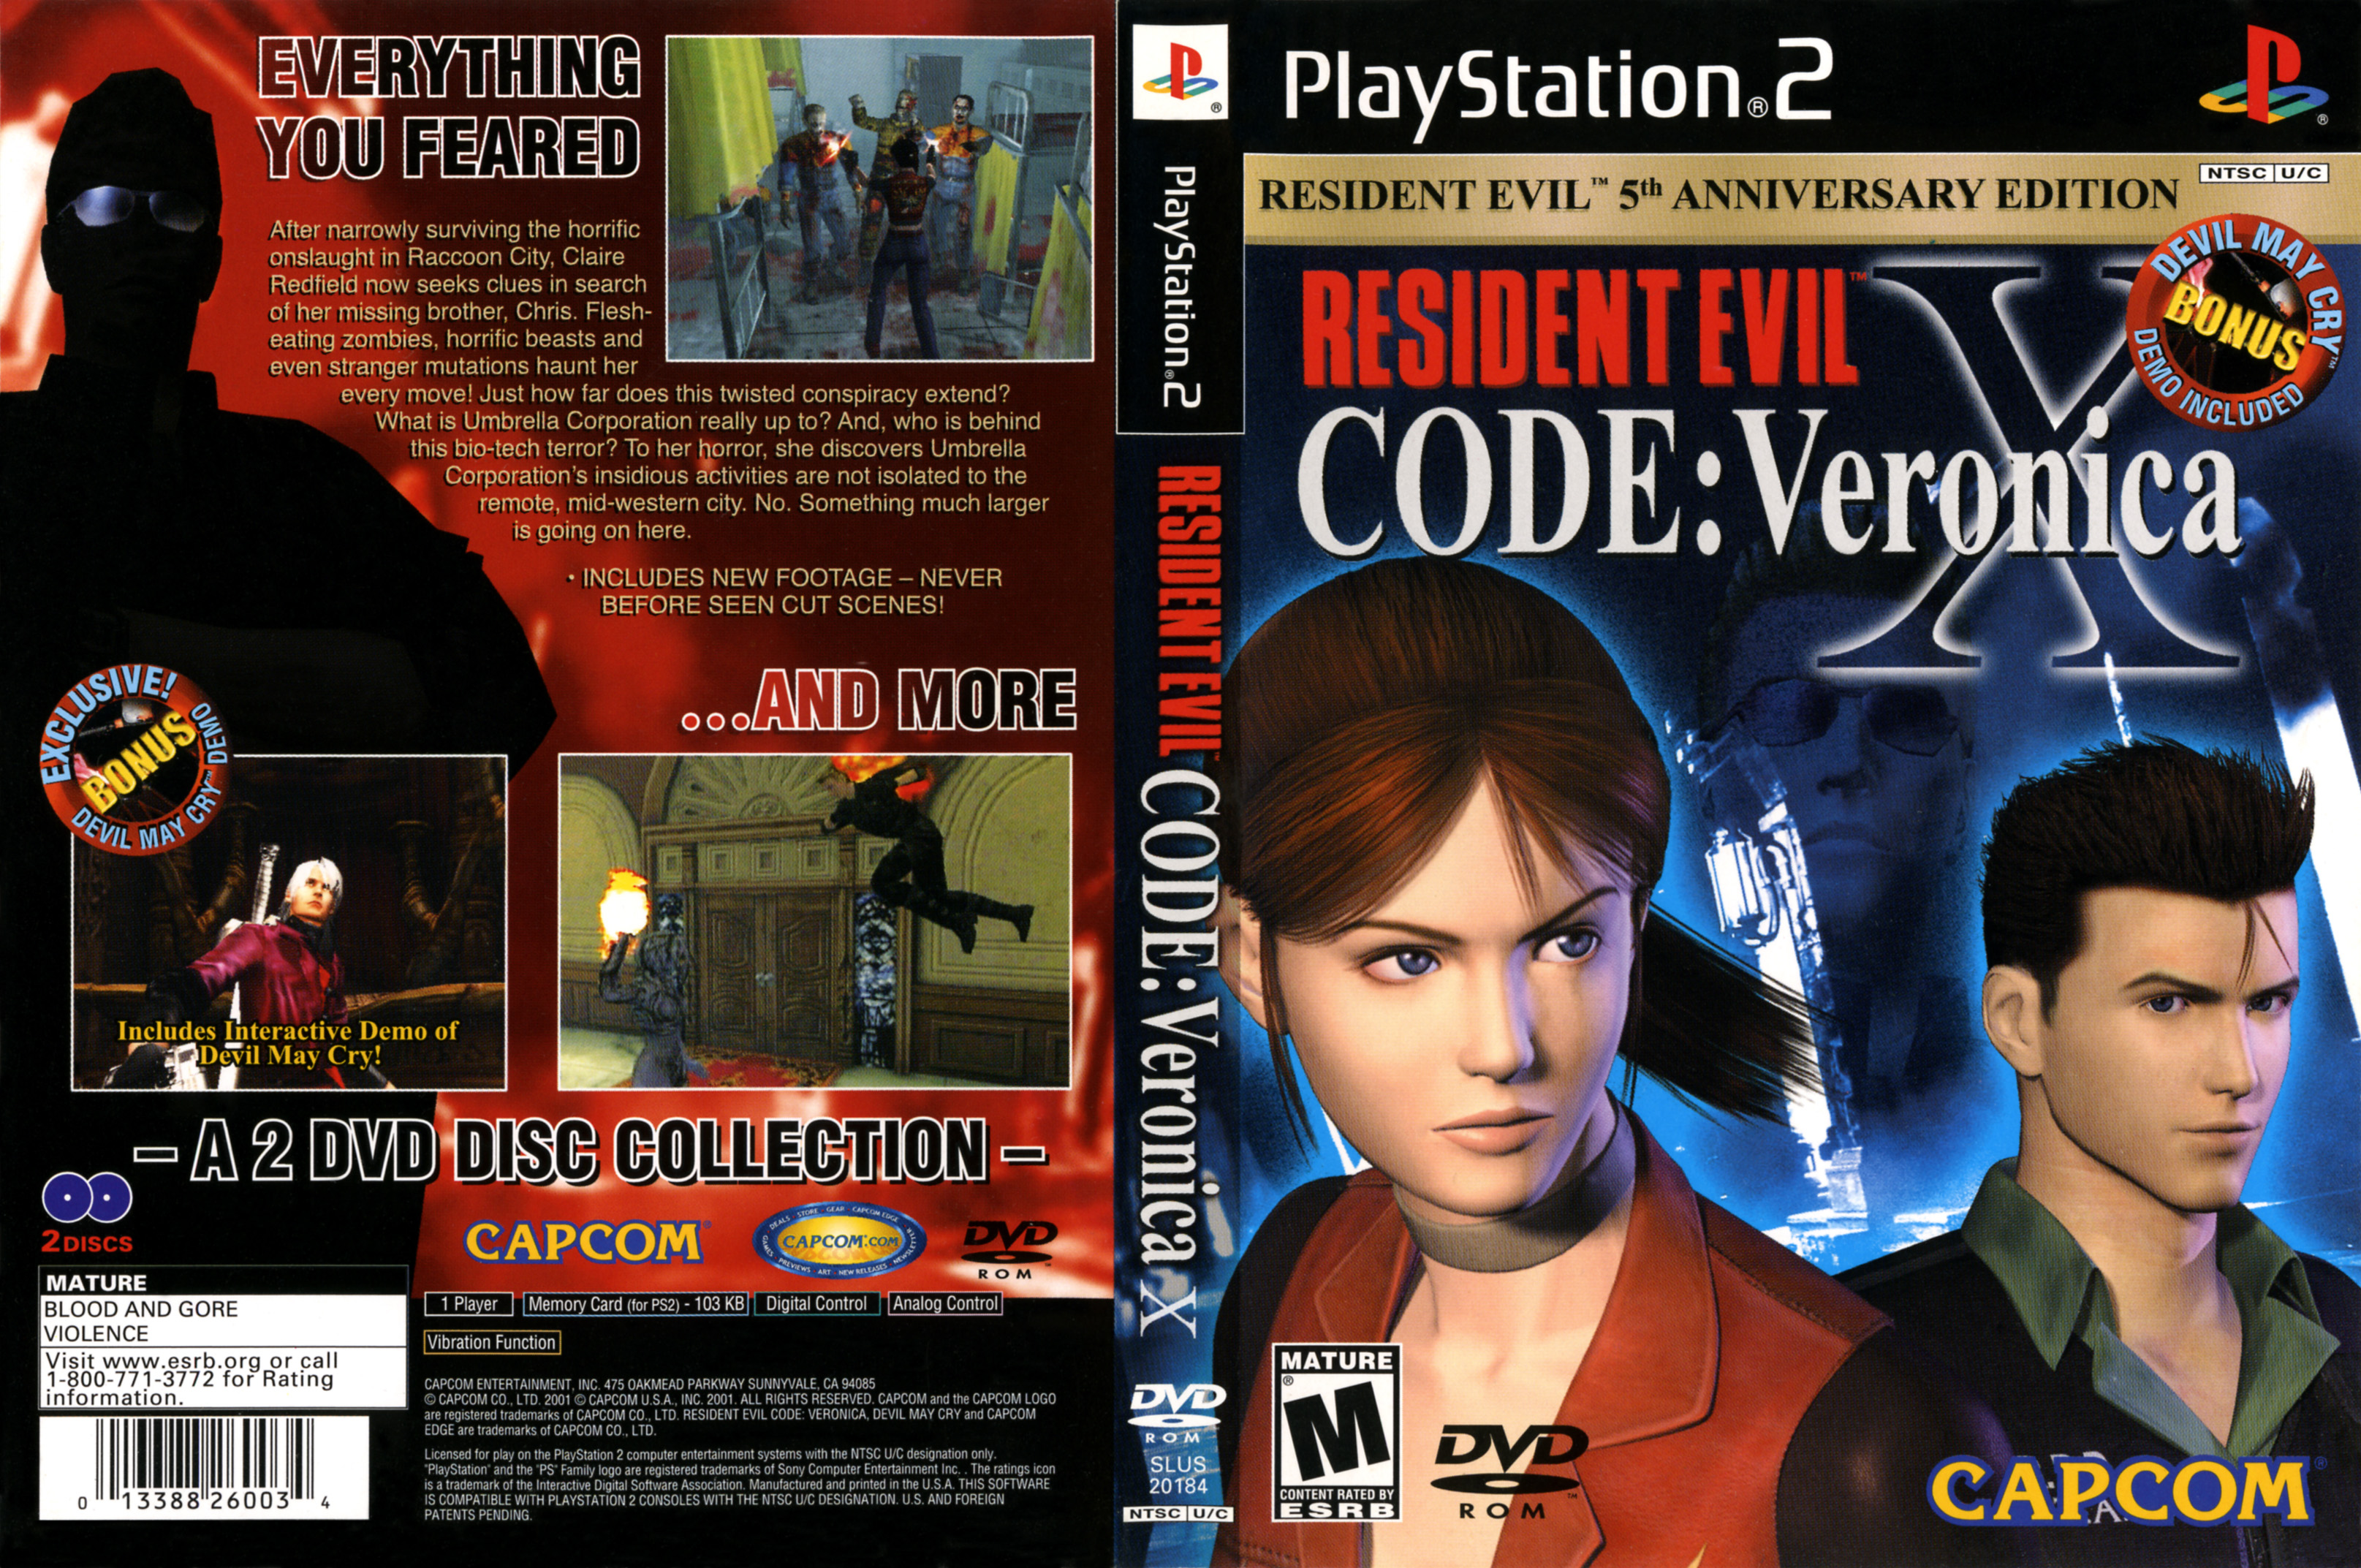 Resident Evil Code Veronica – Surviving the Dead